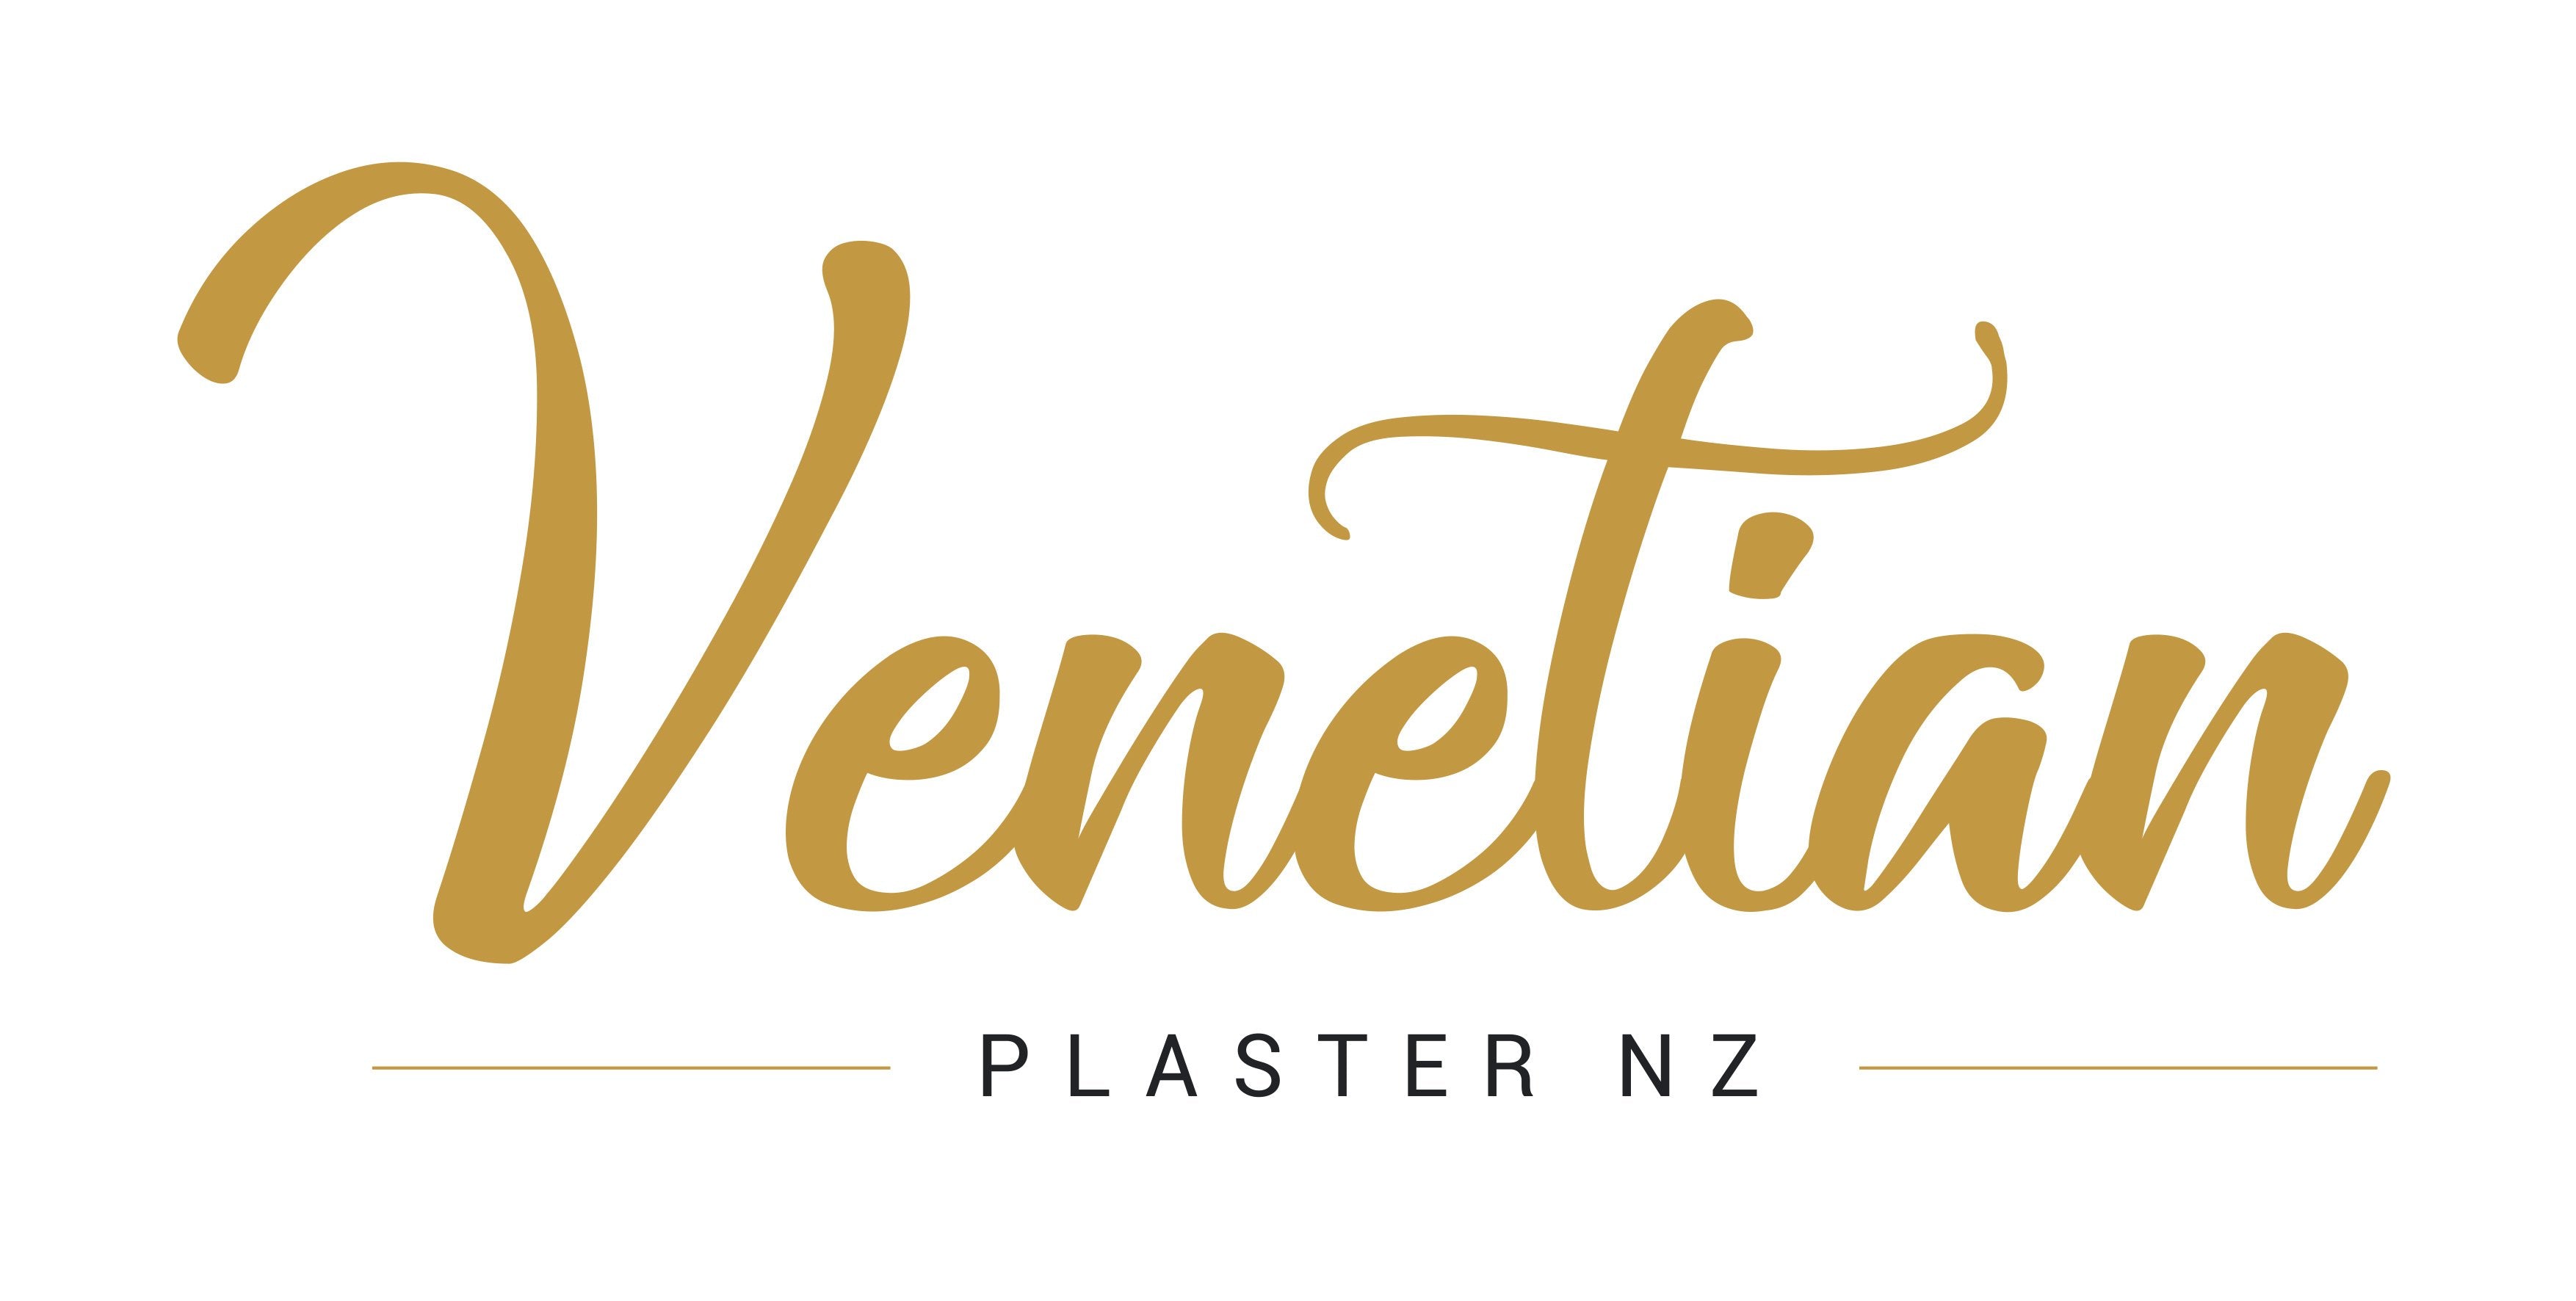 Venetian Plaster NZ